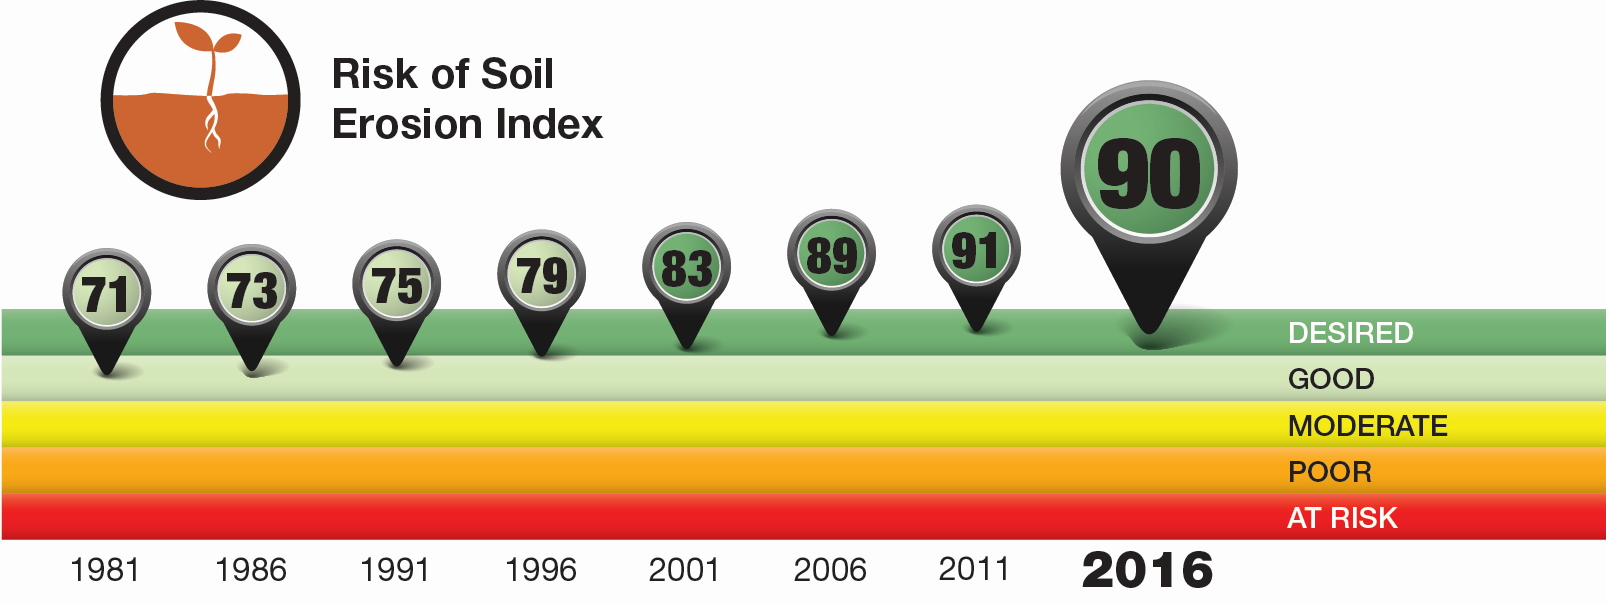 Soil Erosion performance index